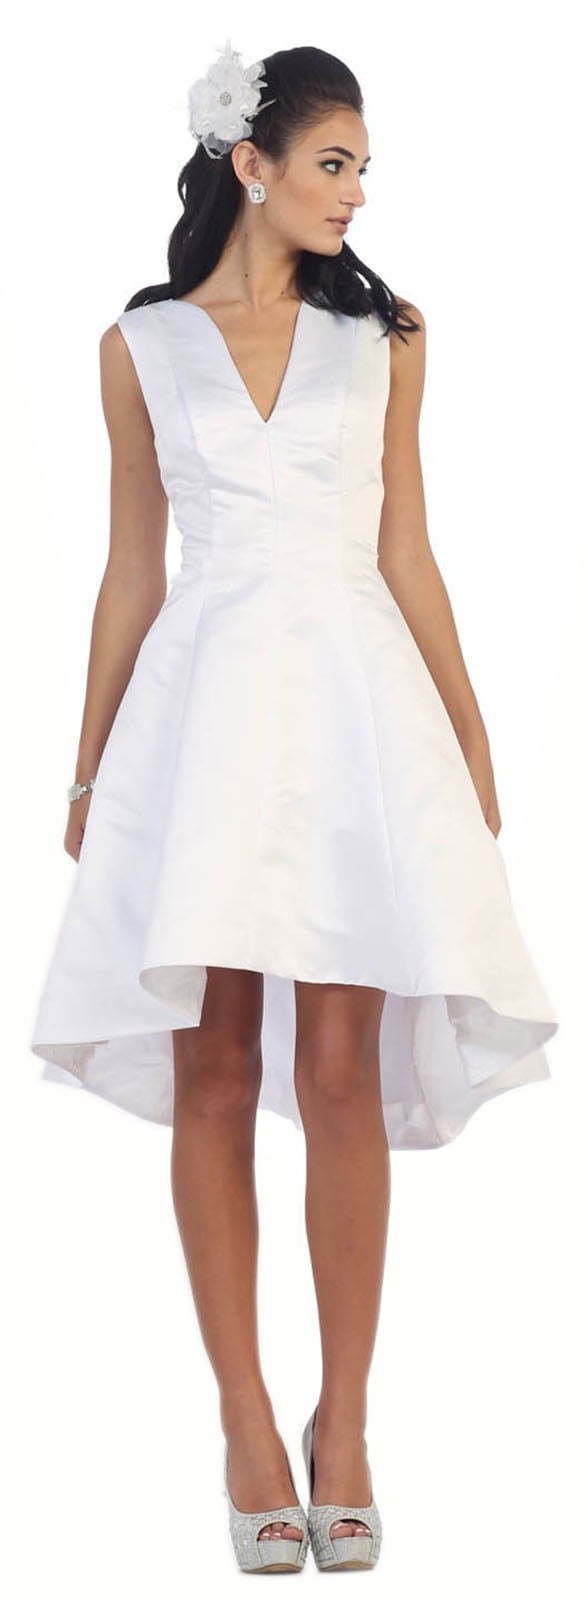 SIMPLE FLOWY COCKTAIL DRESS - Walmart.com